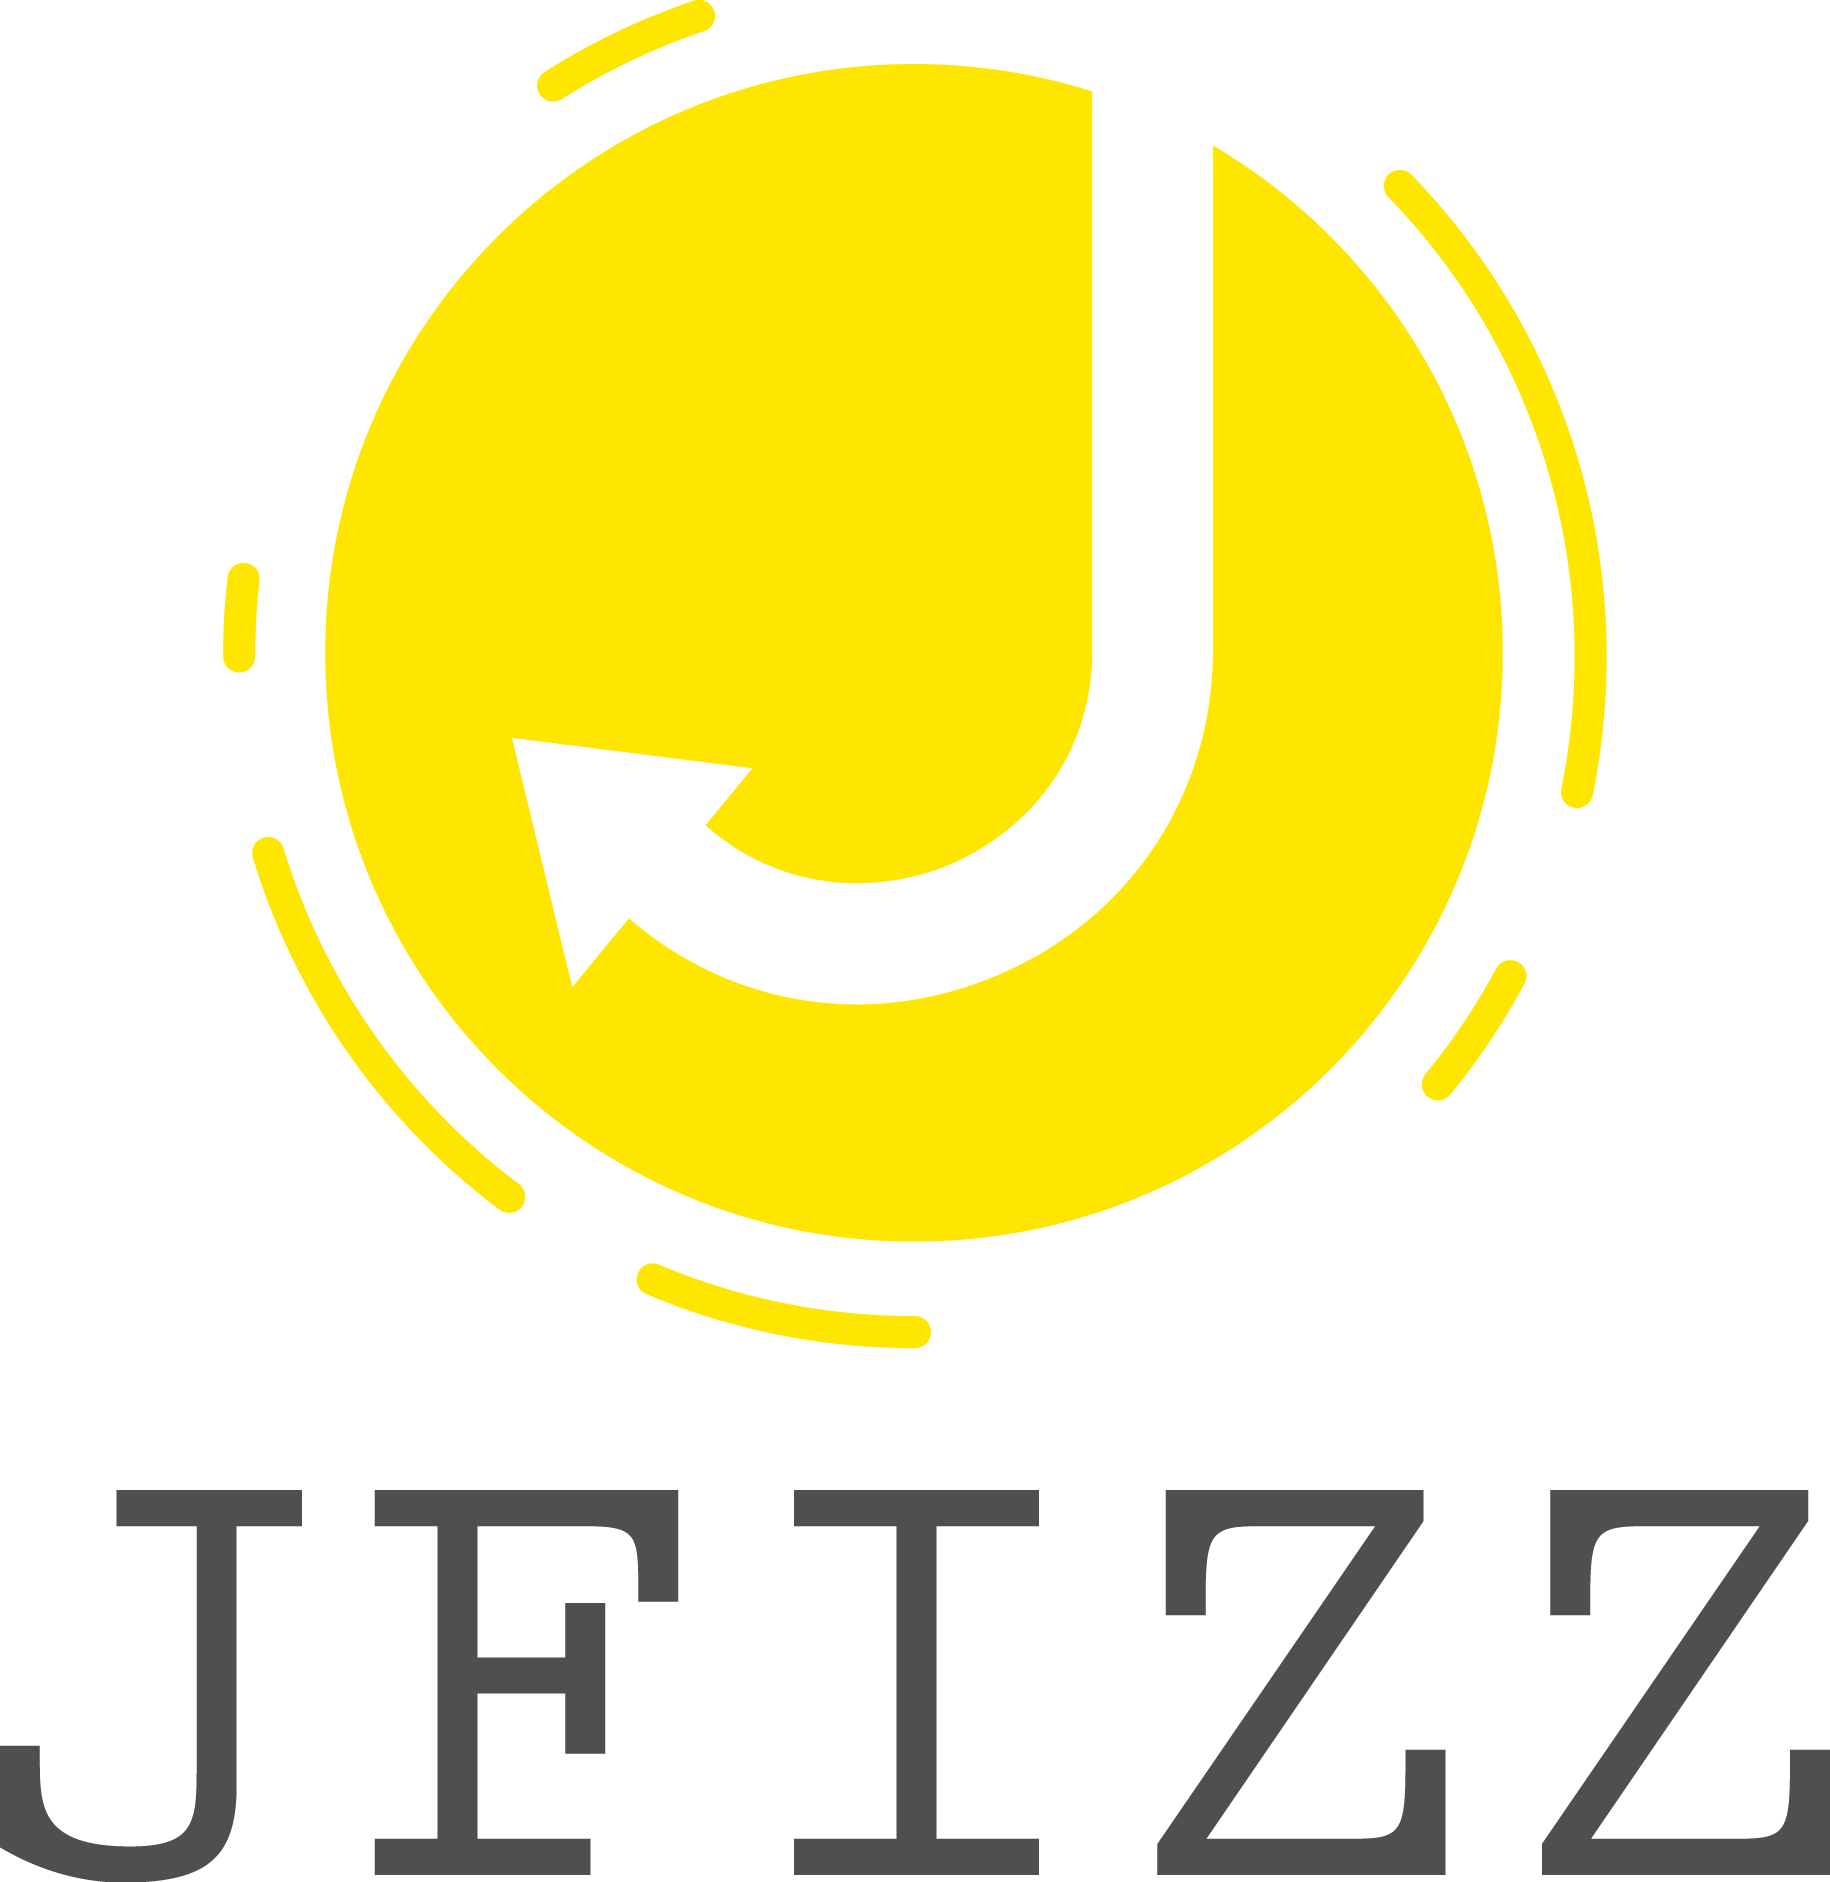 jfizz.com is for sale